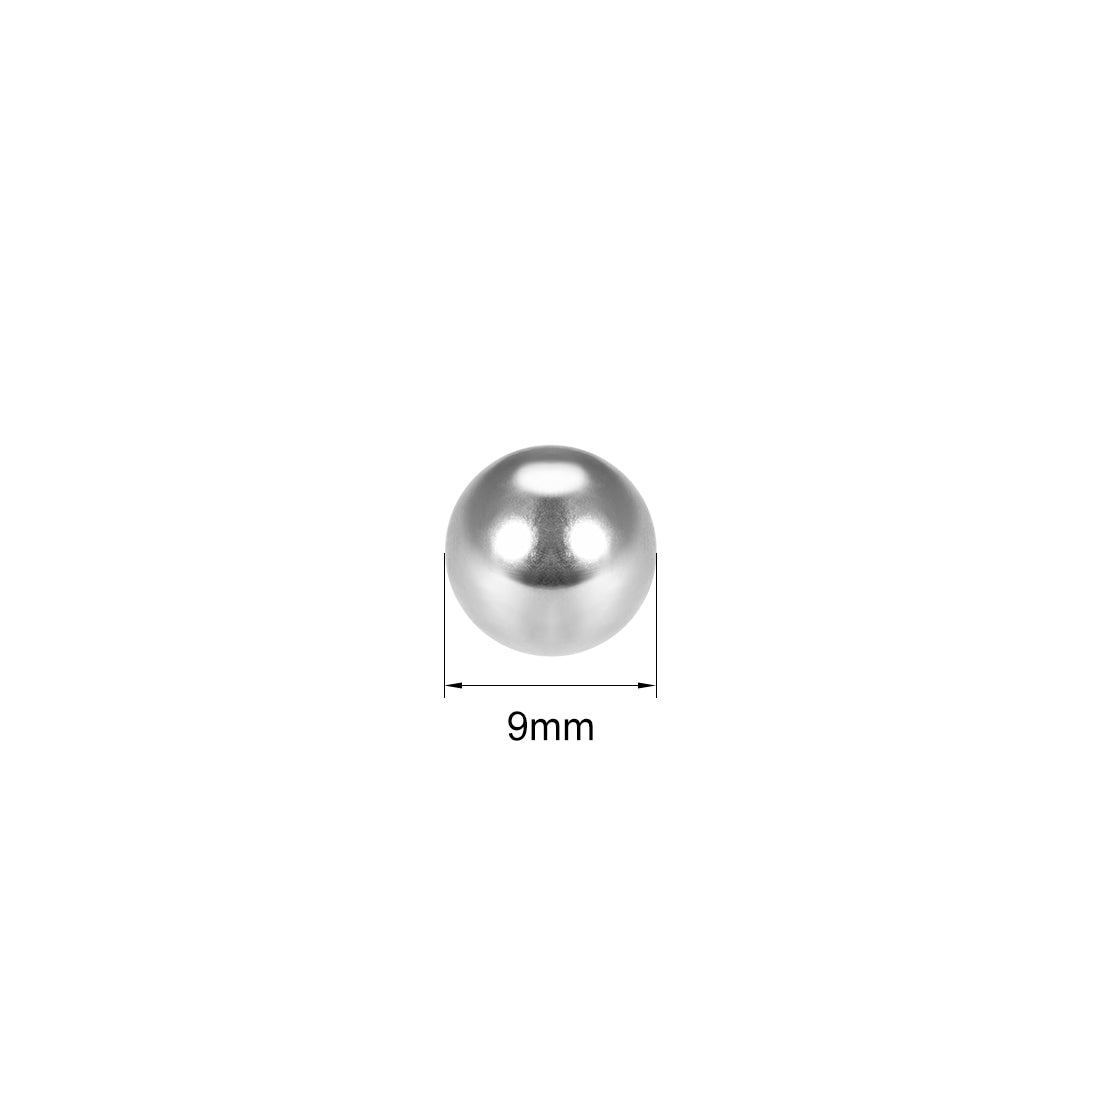 uxcell Uxcell 9mm Precision Chrome Steel Bearing Balls G25 25pcs